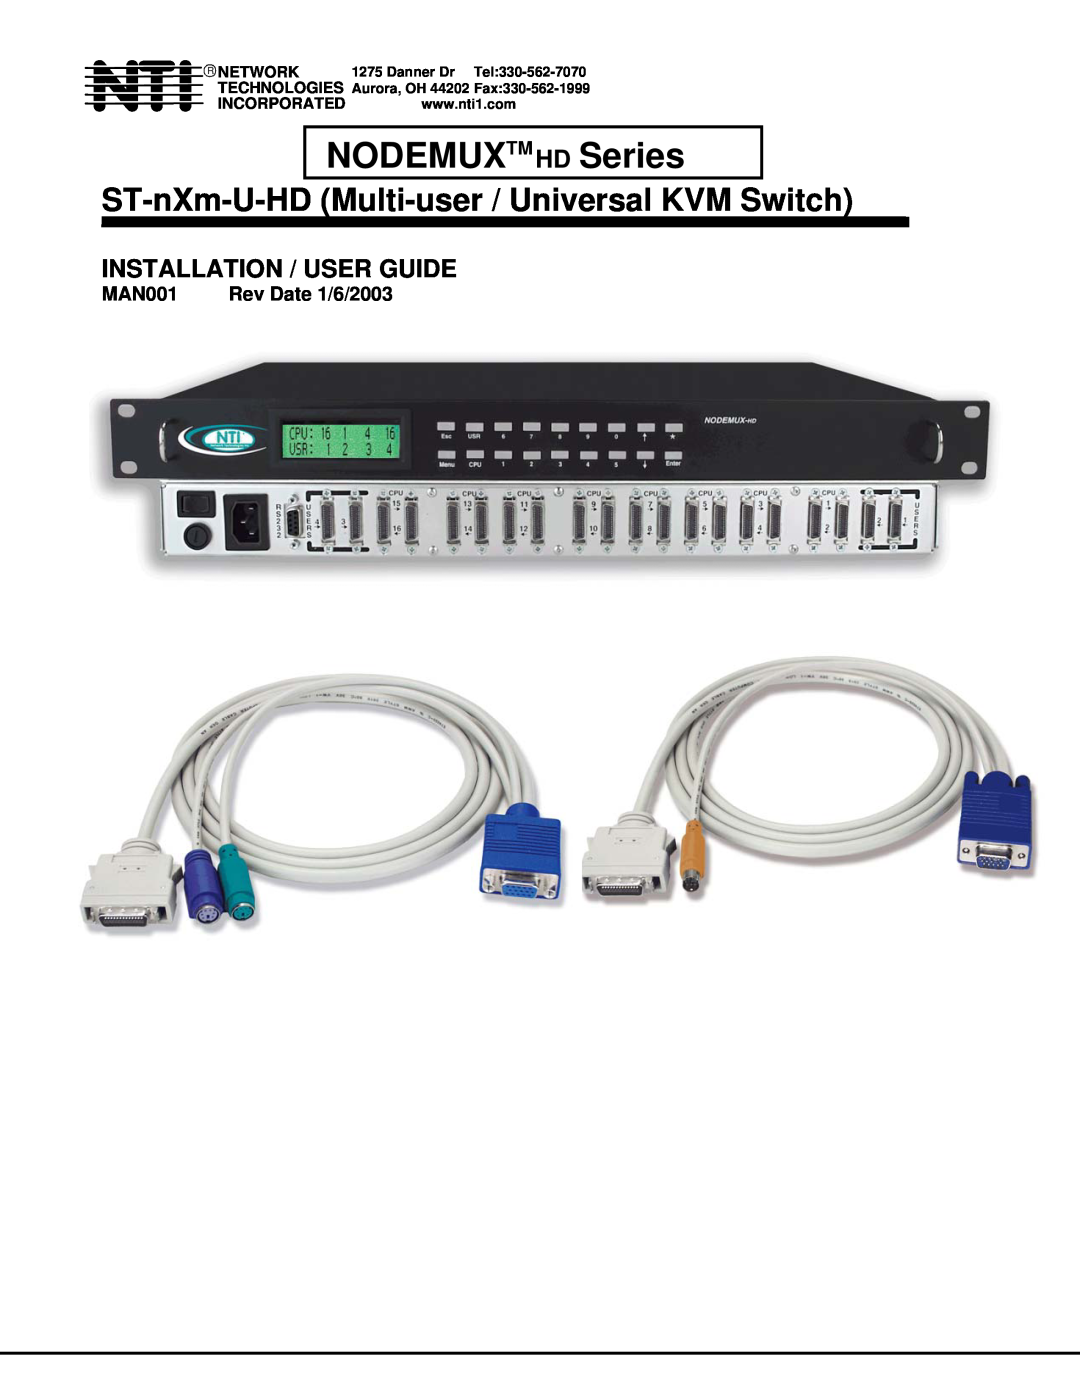 Network Technologies ST-NXM-U-HD manual ST-nXm-U-HD Multi-user / Universal KVM Switch, MAN001 Rev Date 1/6/2003, Danner Dr 